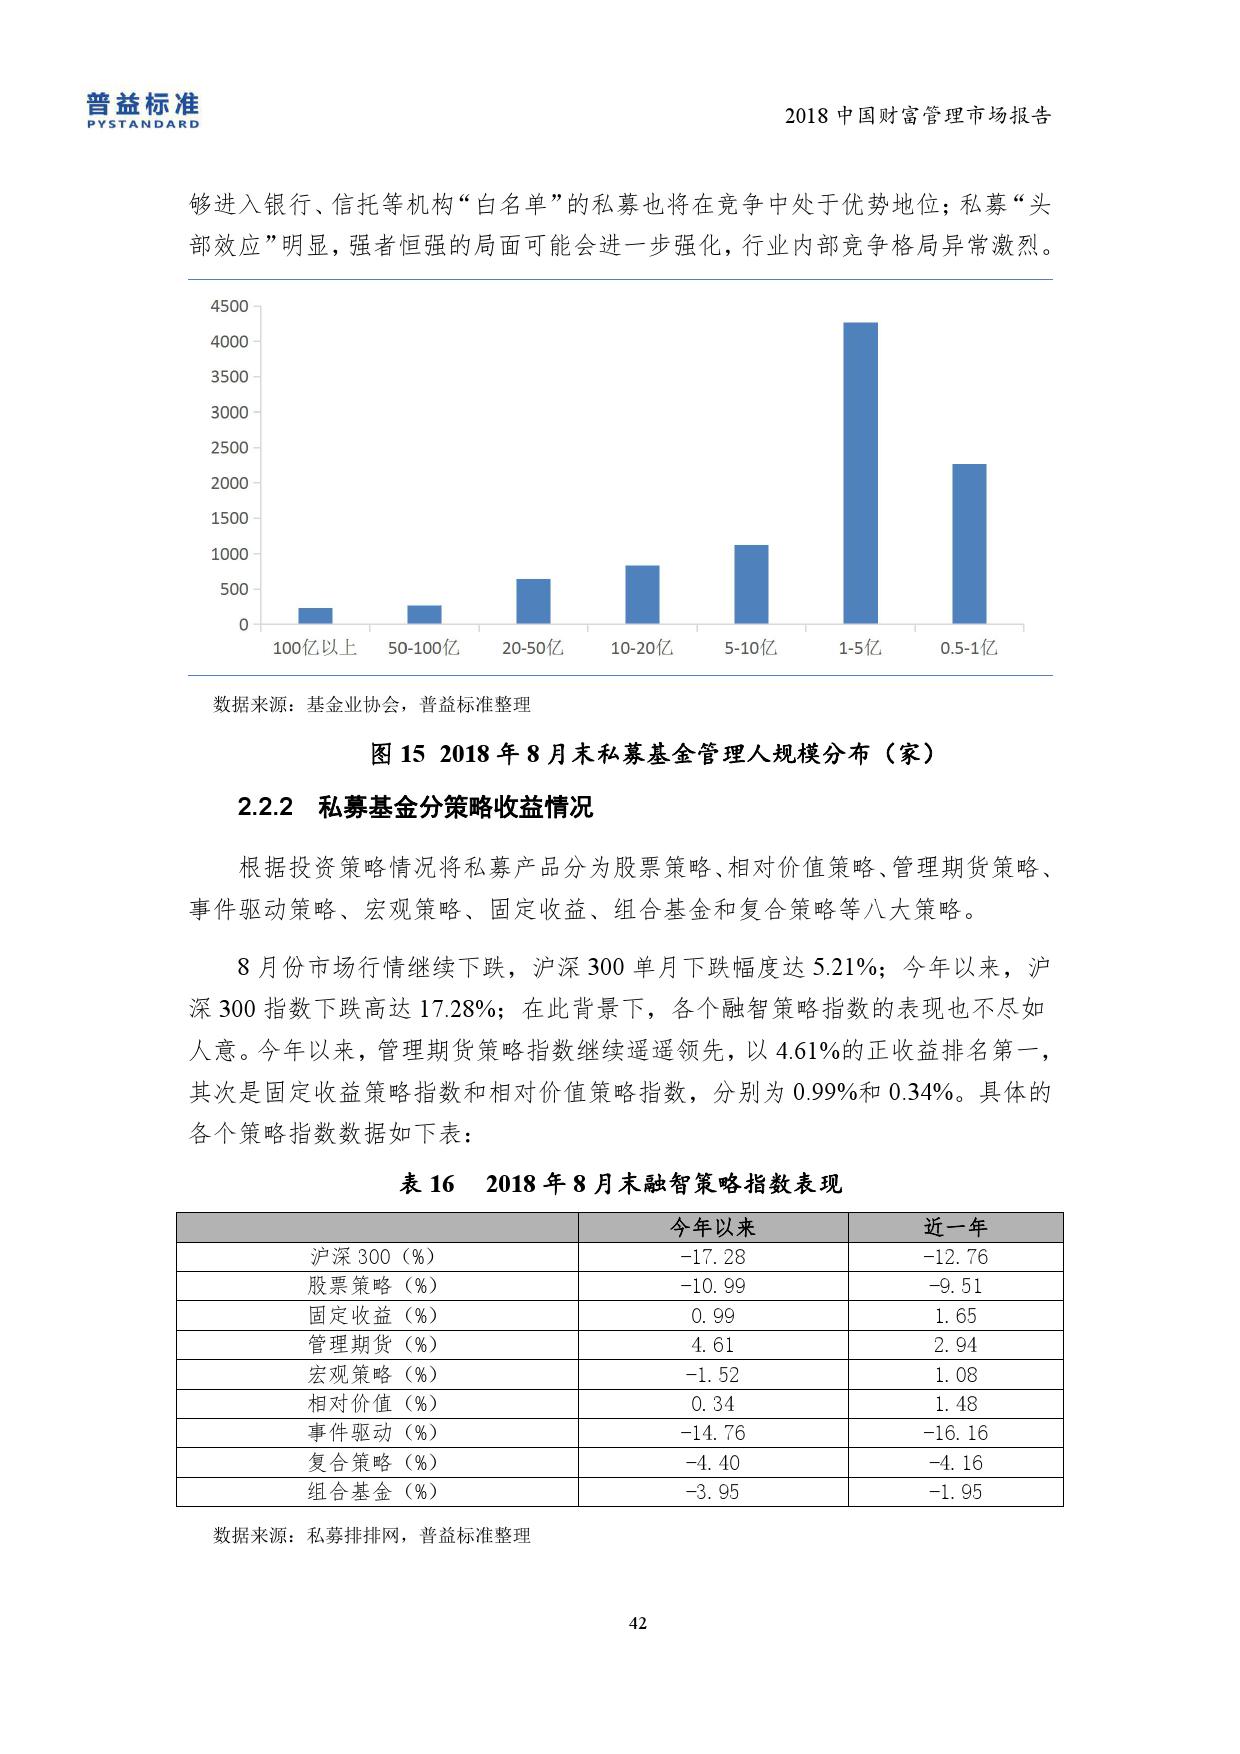 NBD普益标准：2018中国财富管理市场报告（199it）